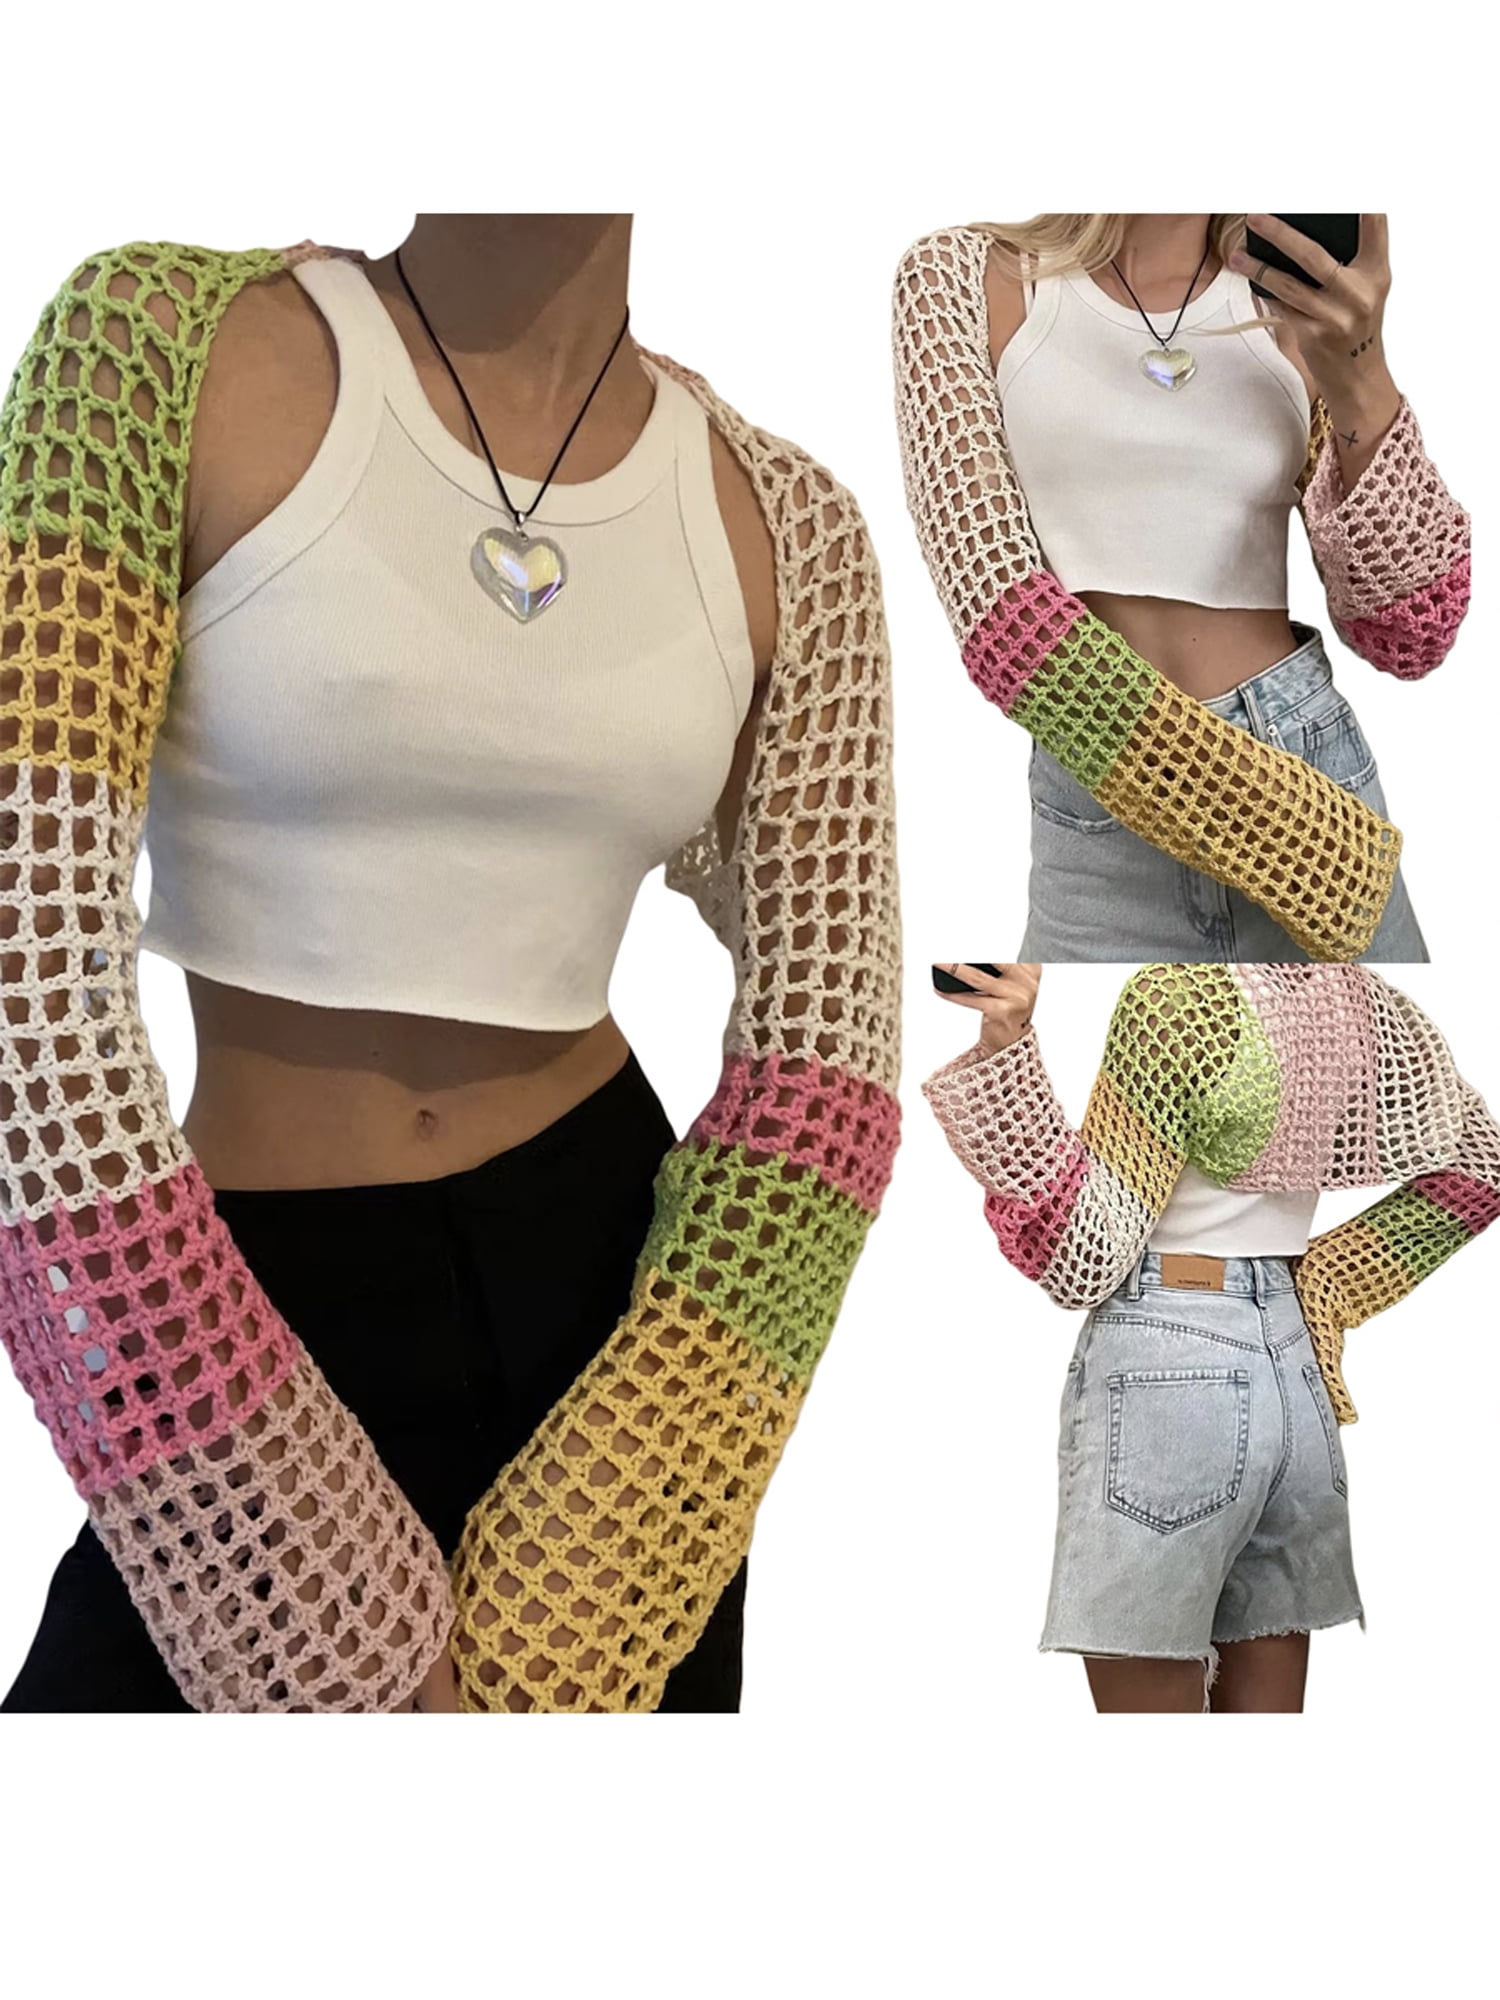 Tsseiatte Women Mesh Shrug, Long Sleeve Crochet Contrast Color Ladies  Summer Daily Party Crop Top 